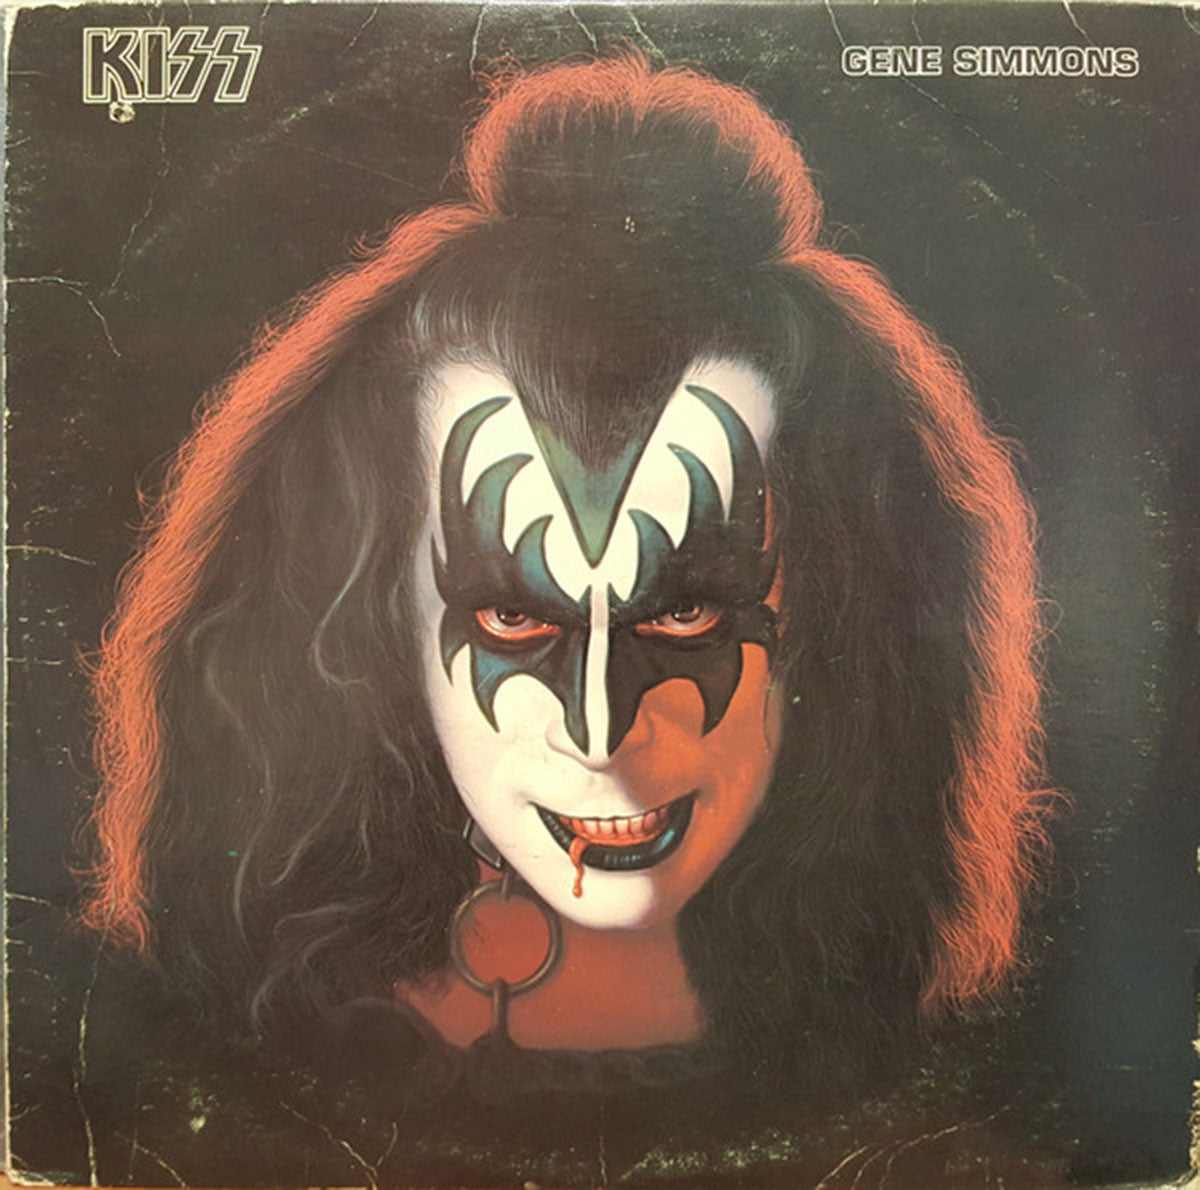 Kiss, Gene Simmons – Gene Simmons